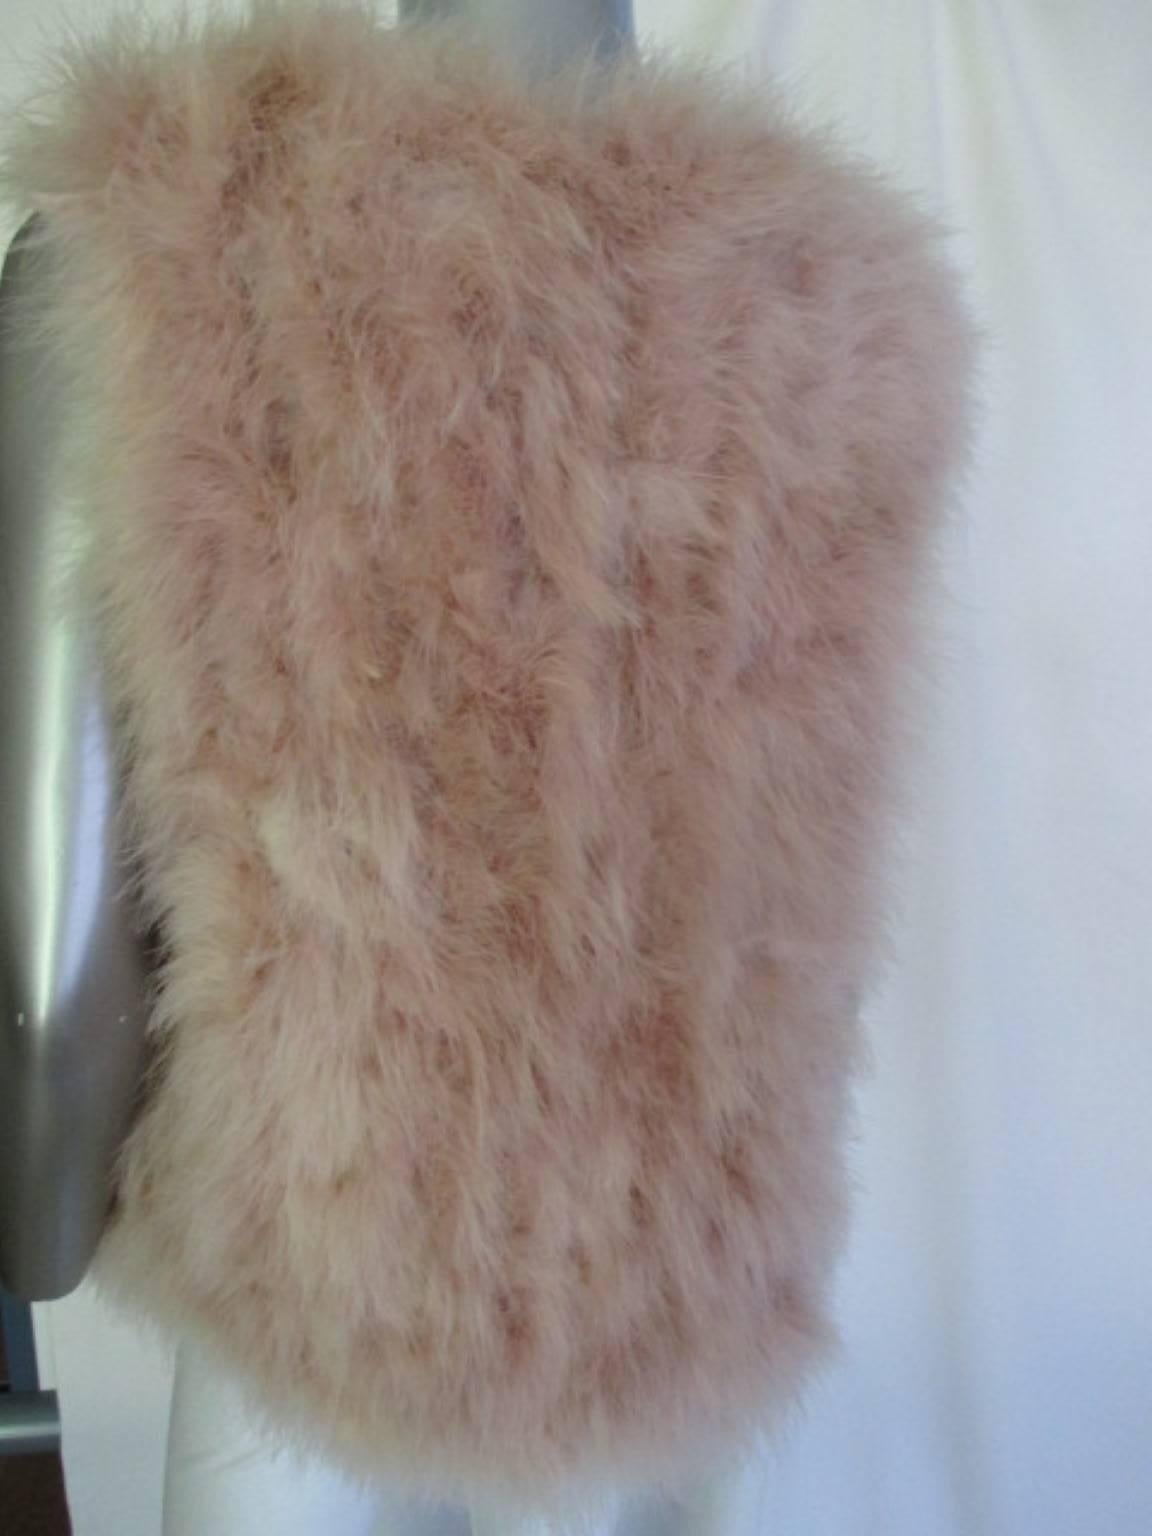 pink sleeveless vest